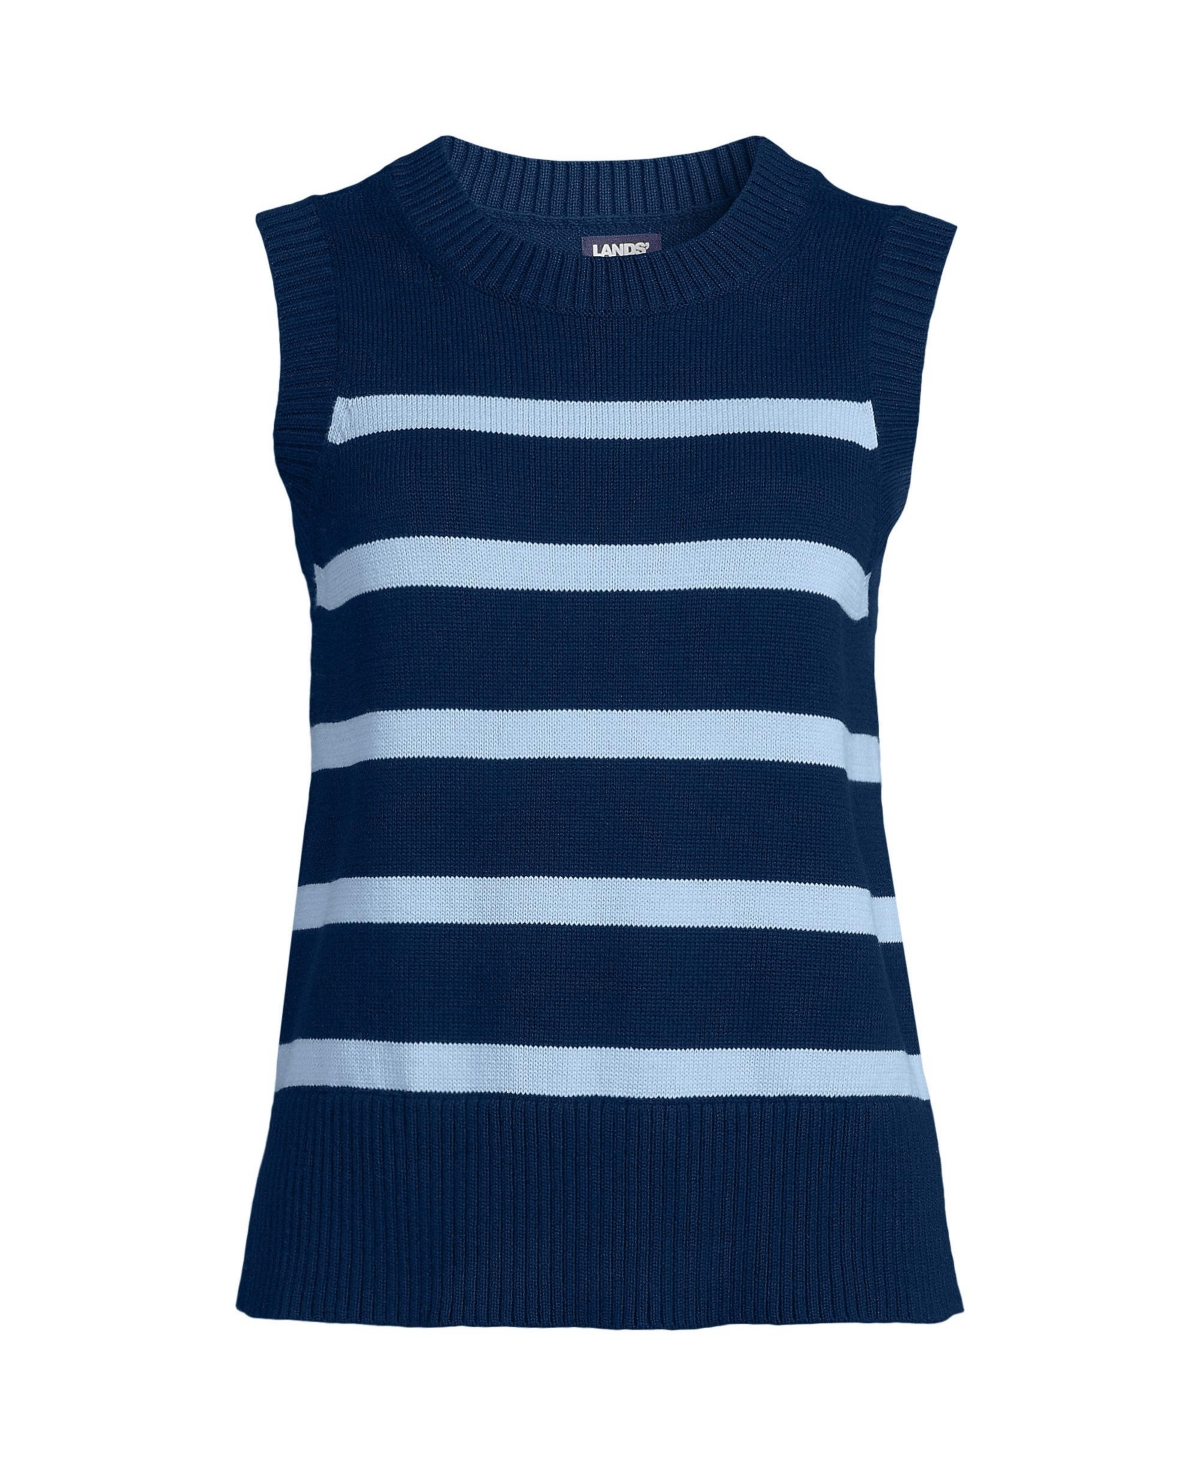 Women's Drifter Cable Stitch Sweater - Navy/soft blue breton stripe